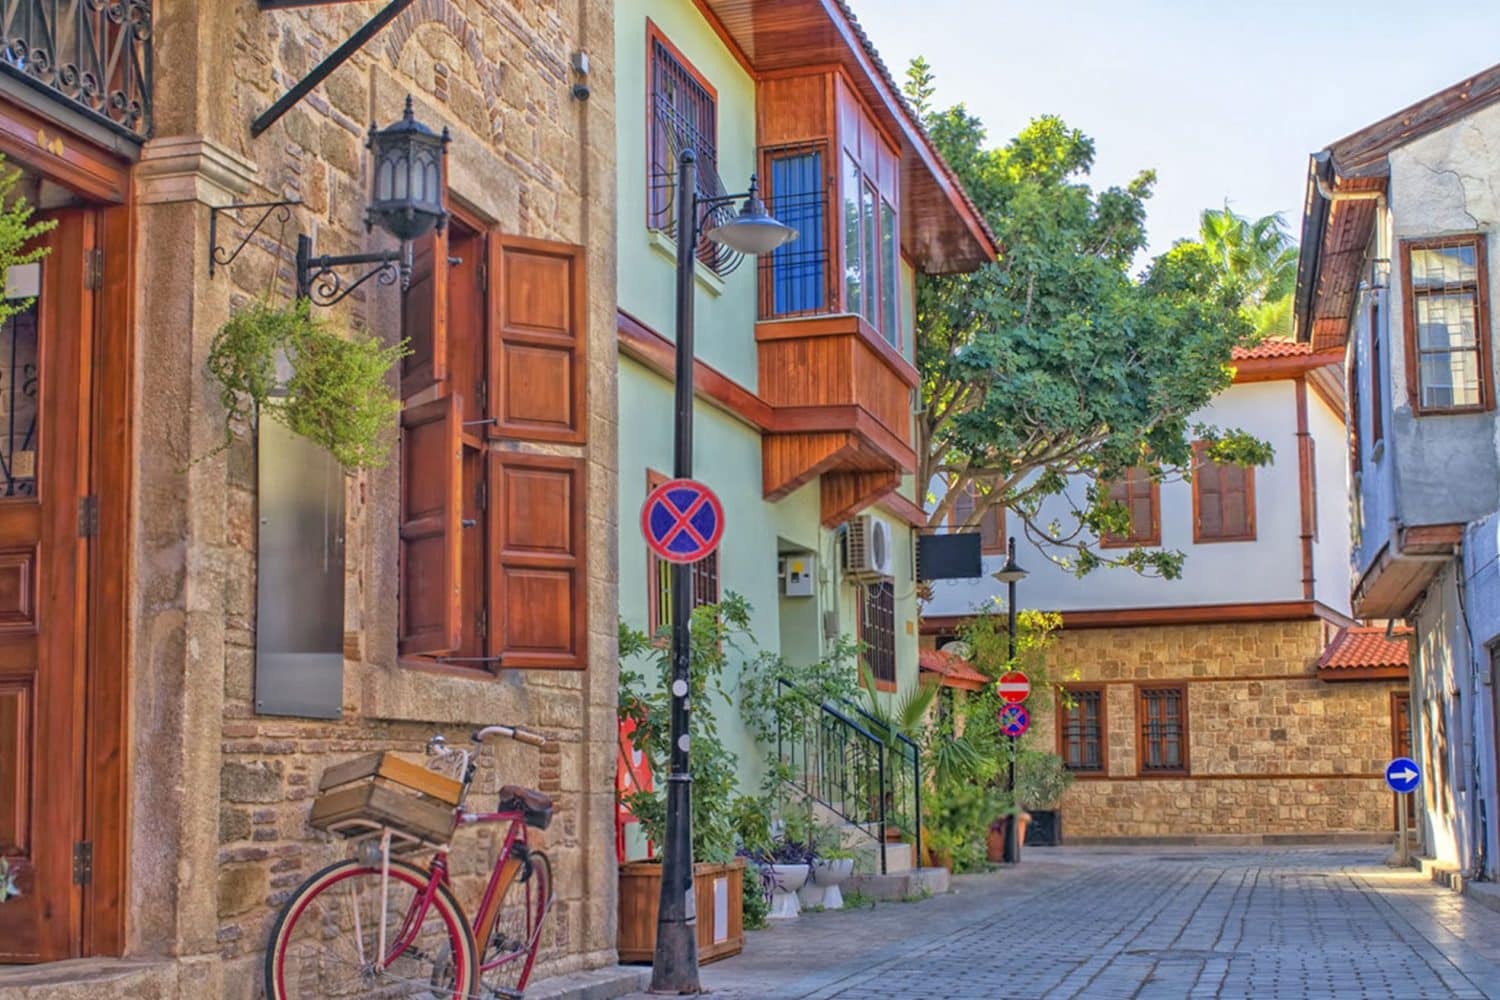 Tour Photos: Antalya Kaleici houses